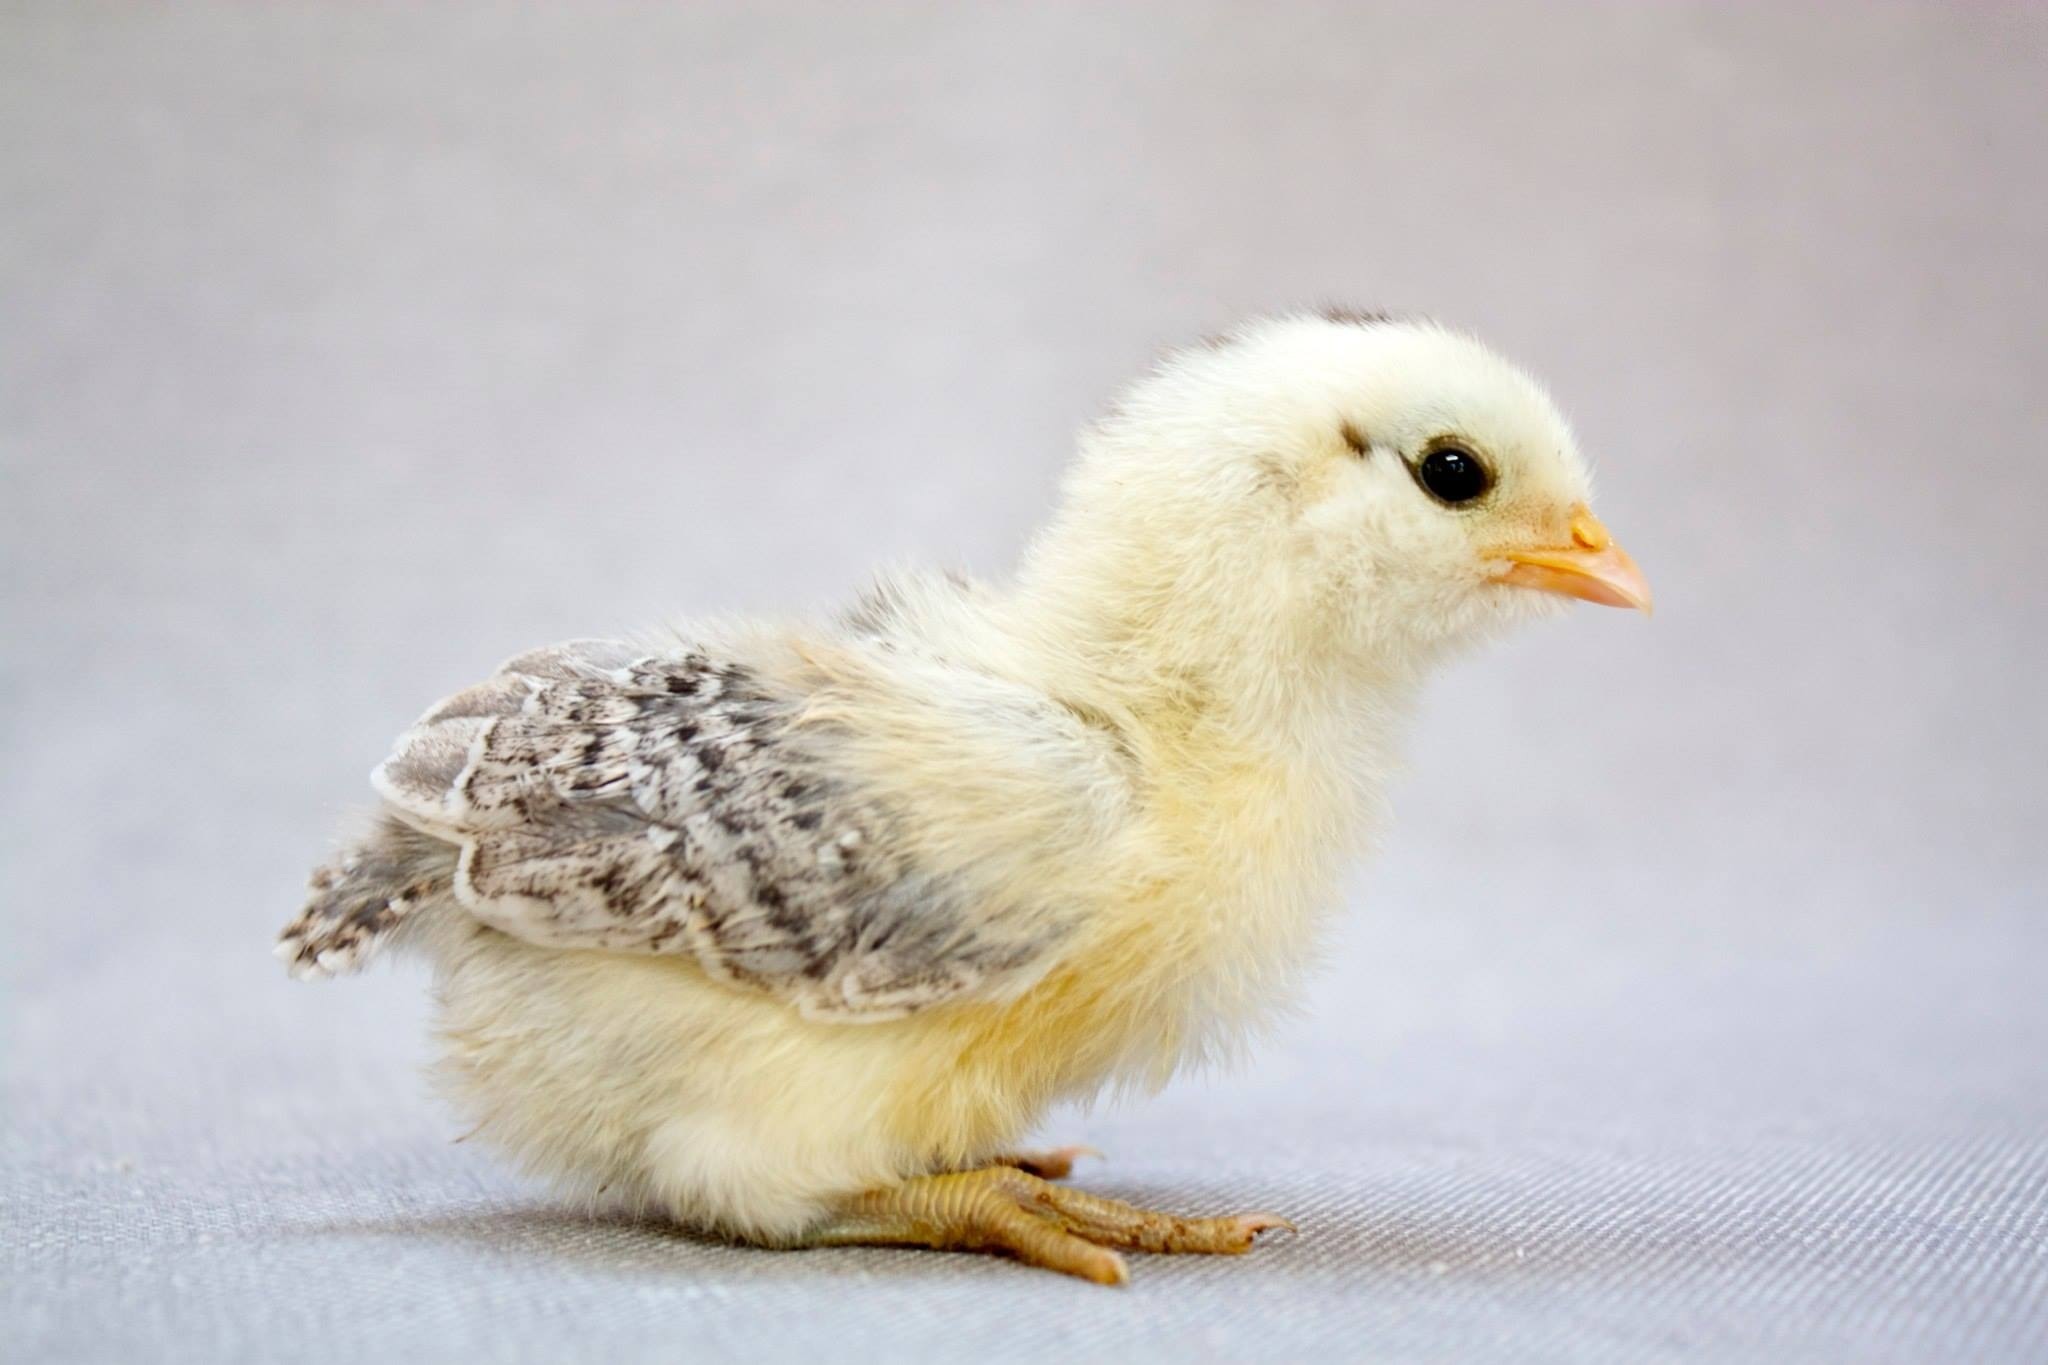 Easter Egger chick, June, at 10 days old.